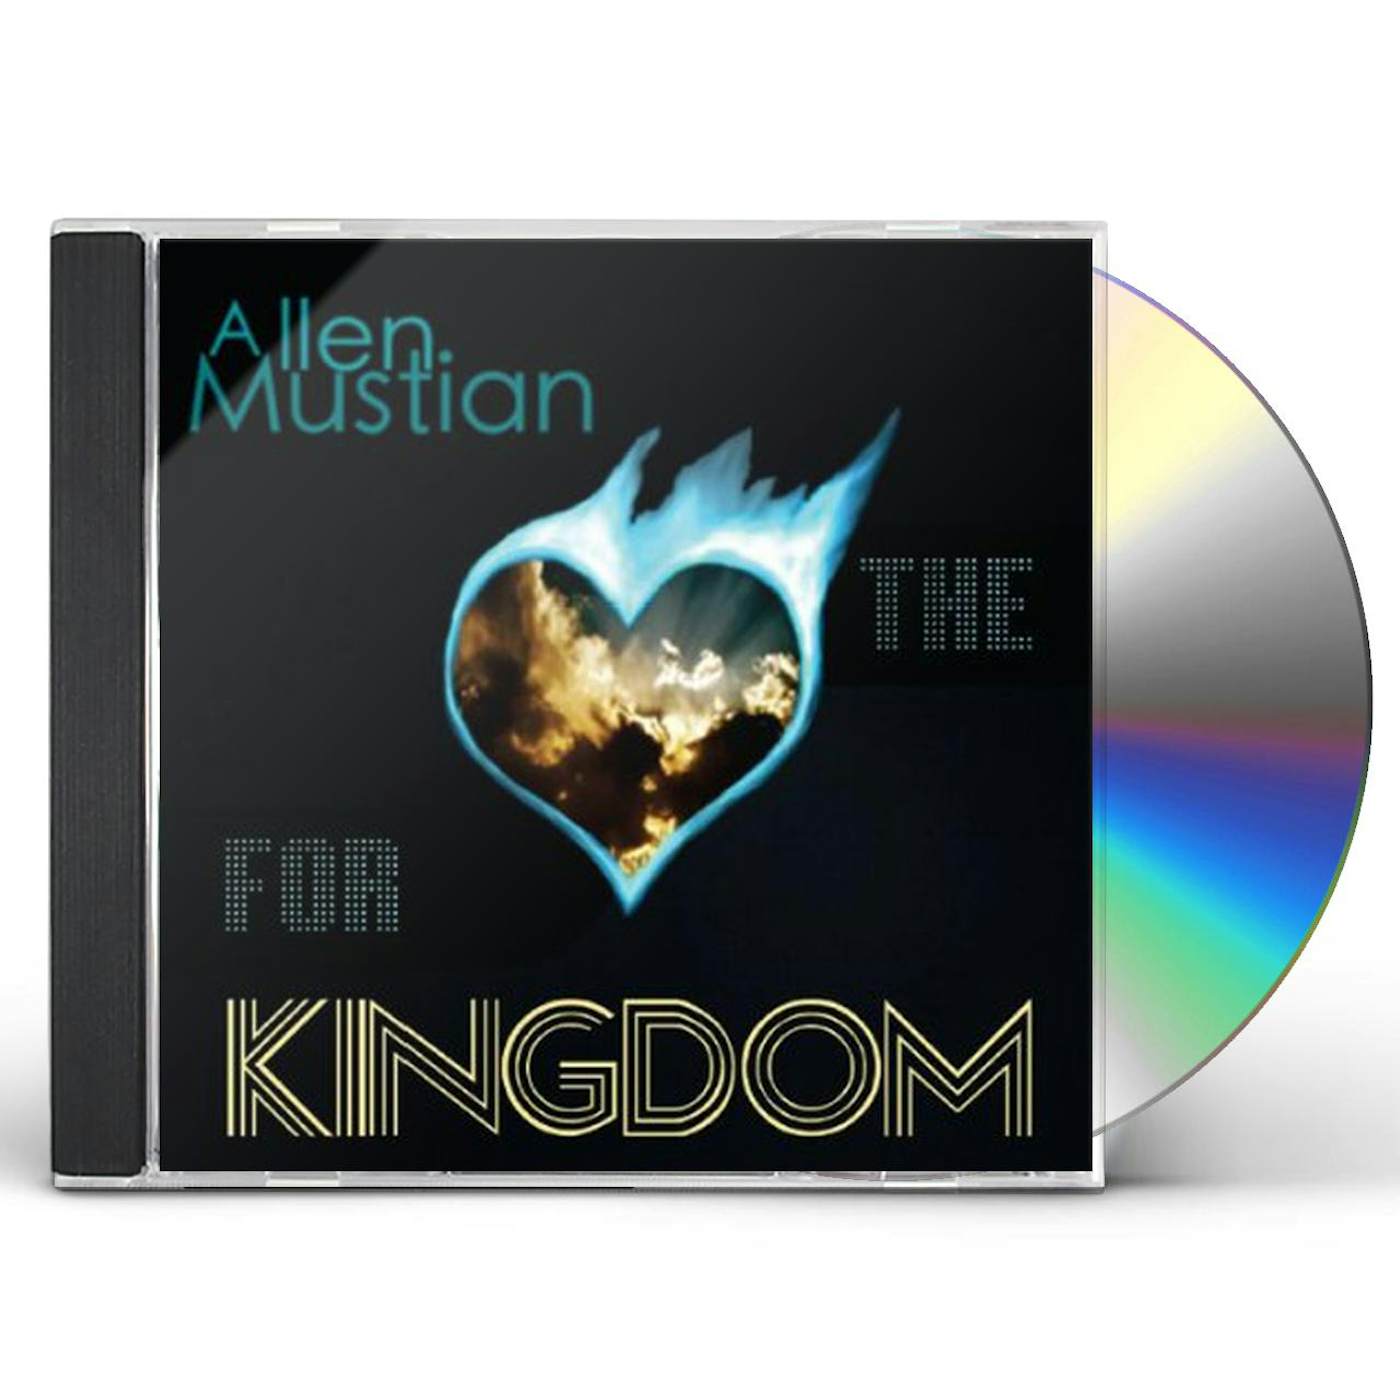 Allen Mustian FOR THE KINGDOM CD